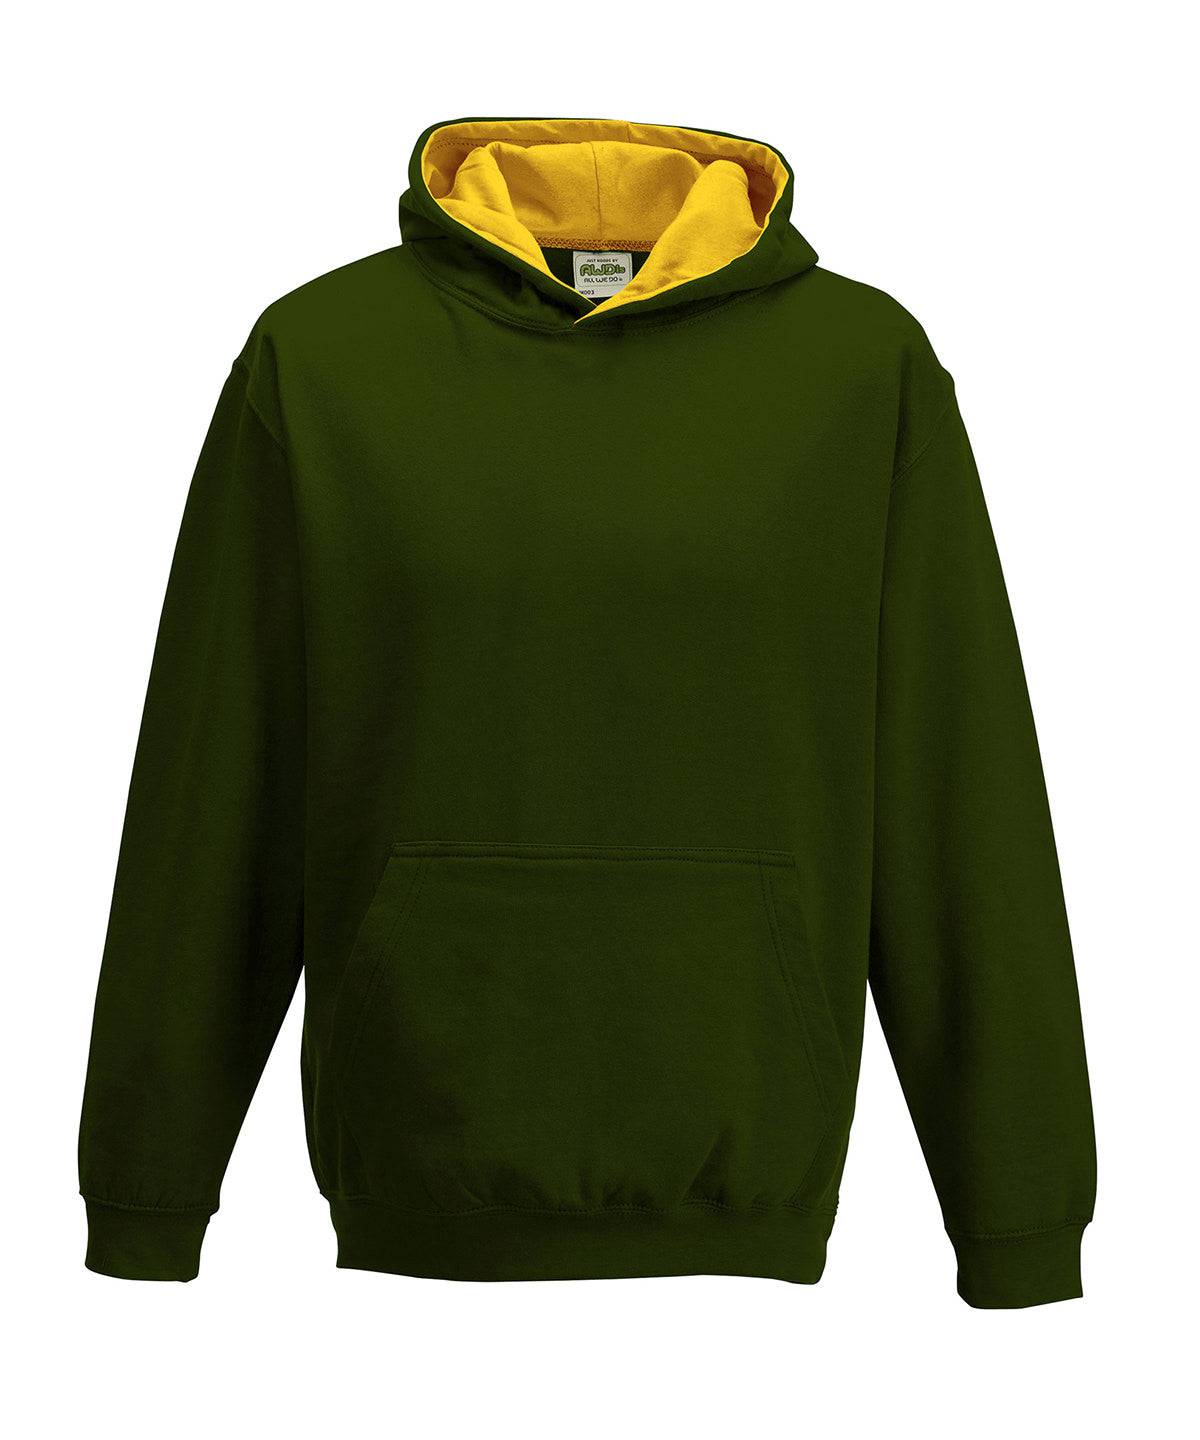 Forest Green/Gold - Kids varsity hoodie